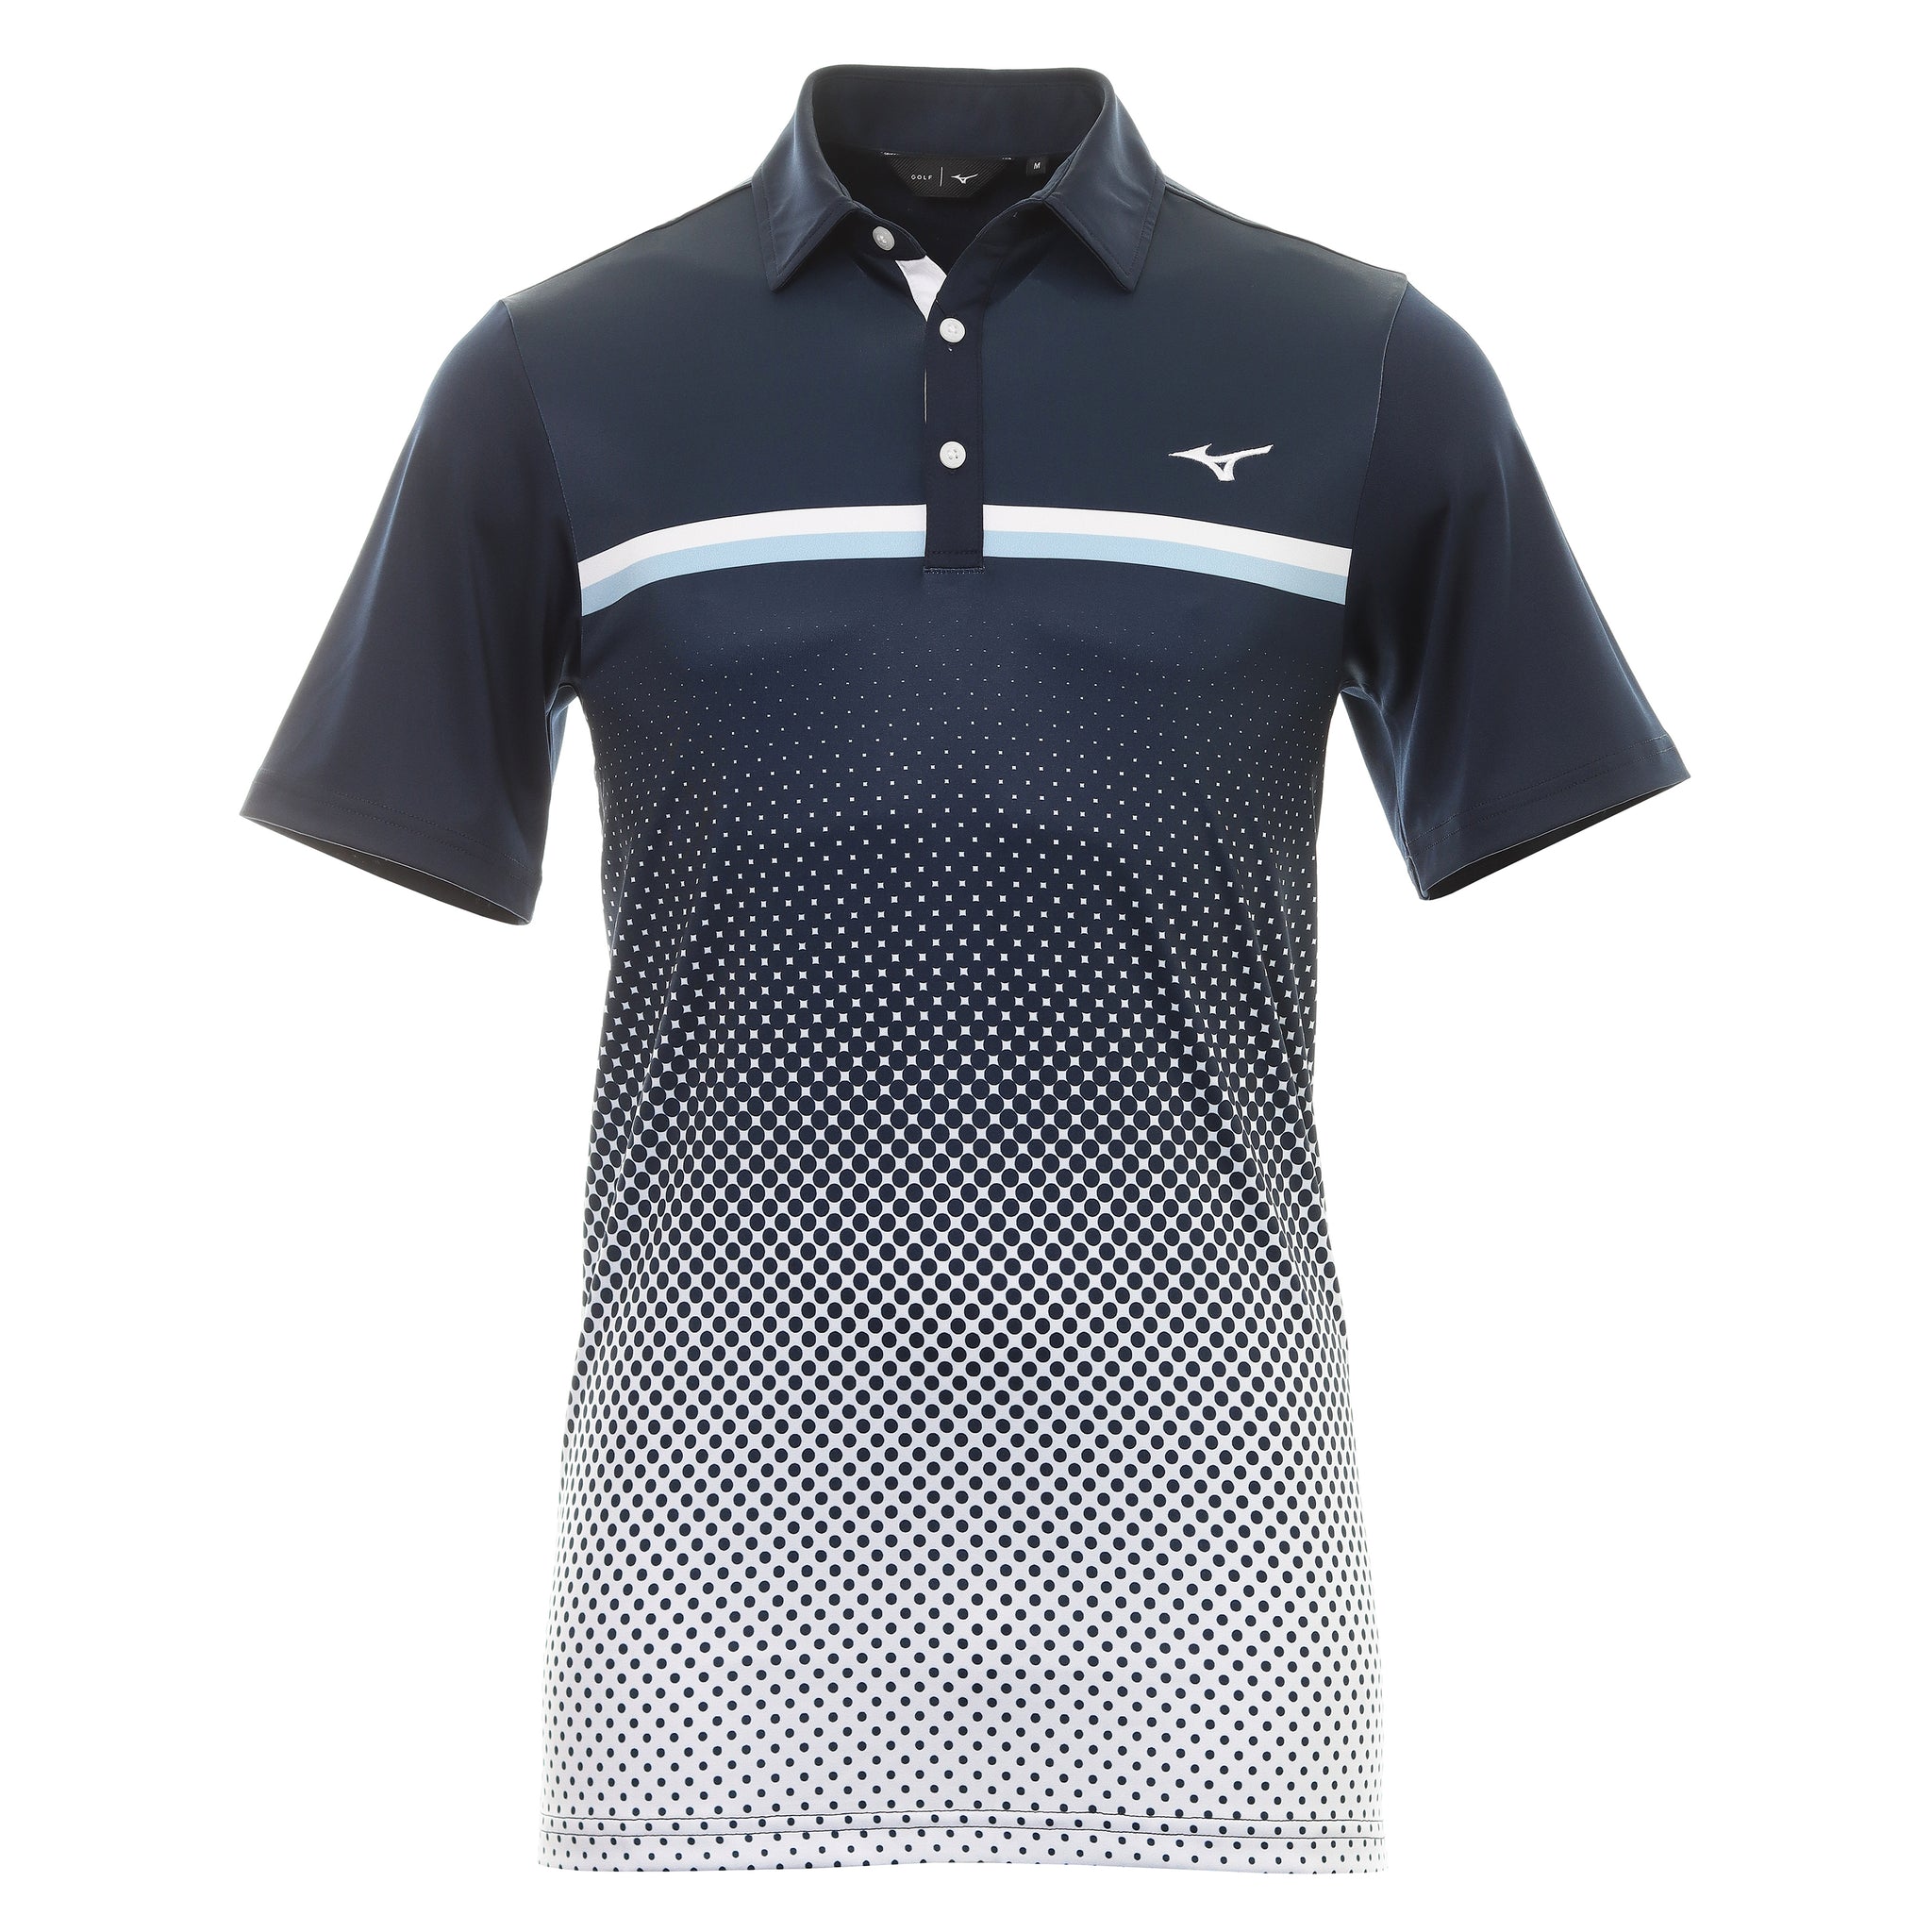 mizuno-golf-quick-dry-elite-gradient-shirt-52ga2010-deep-navy-14